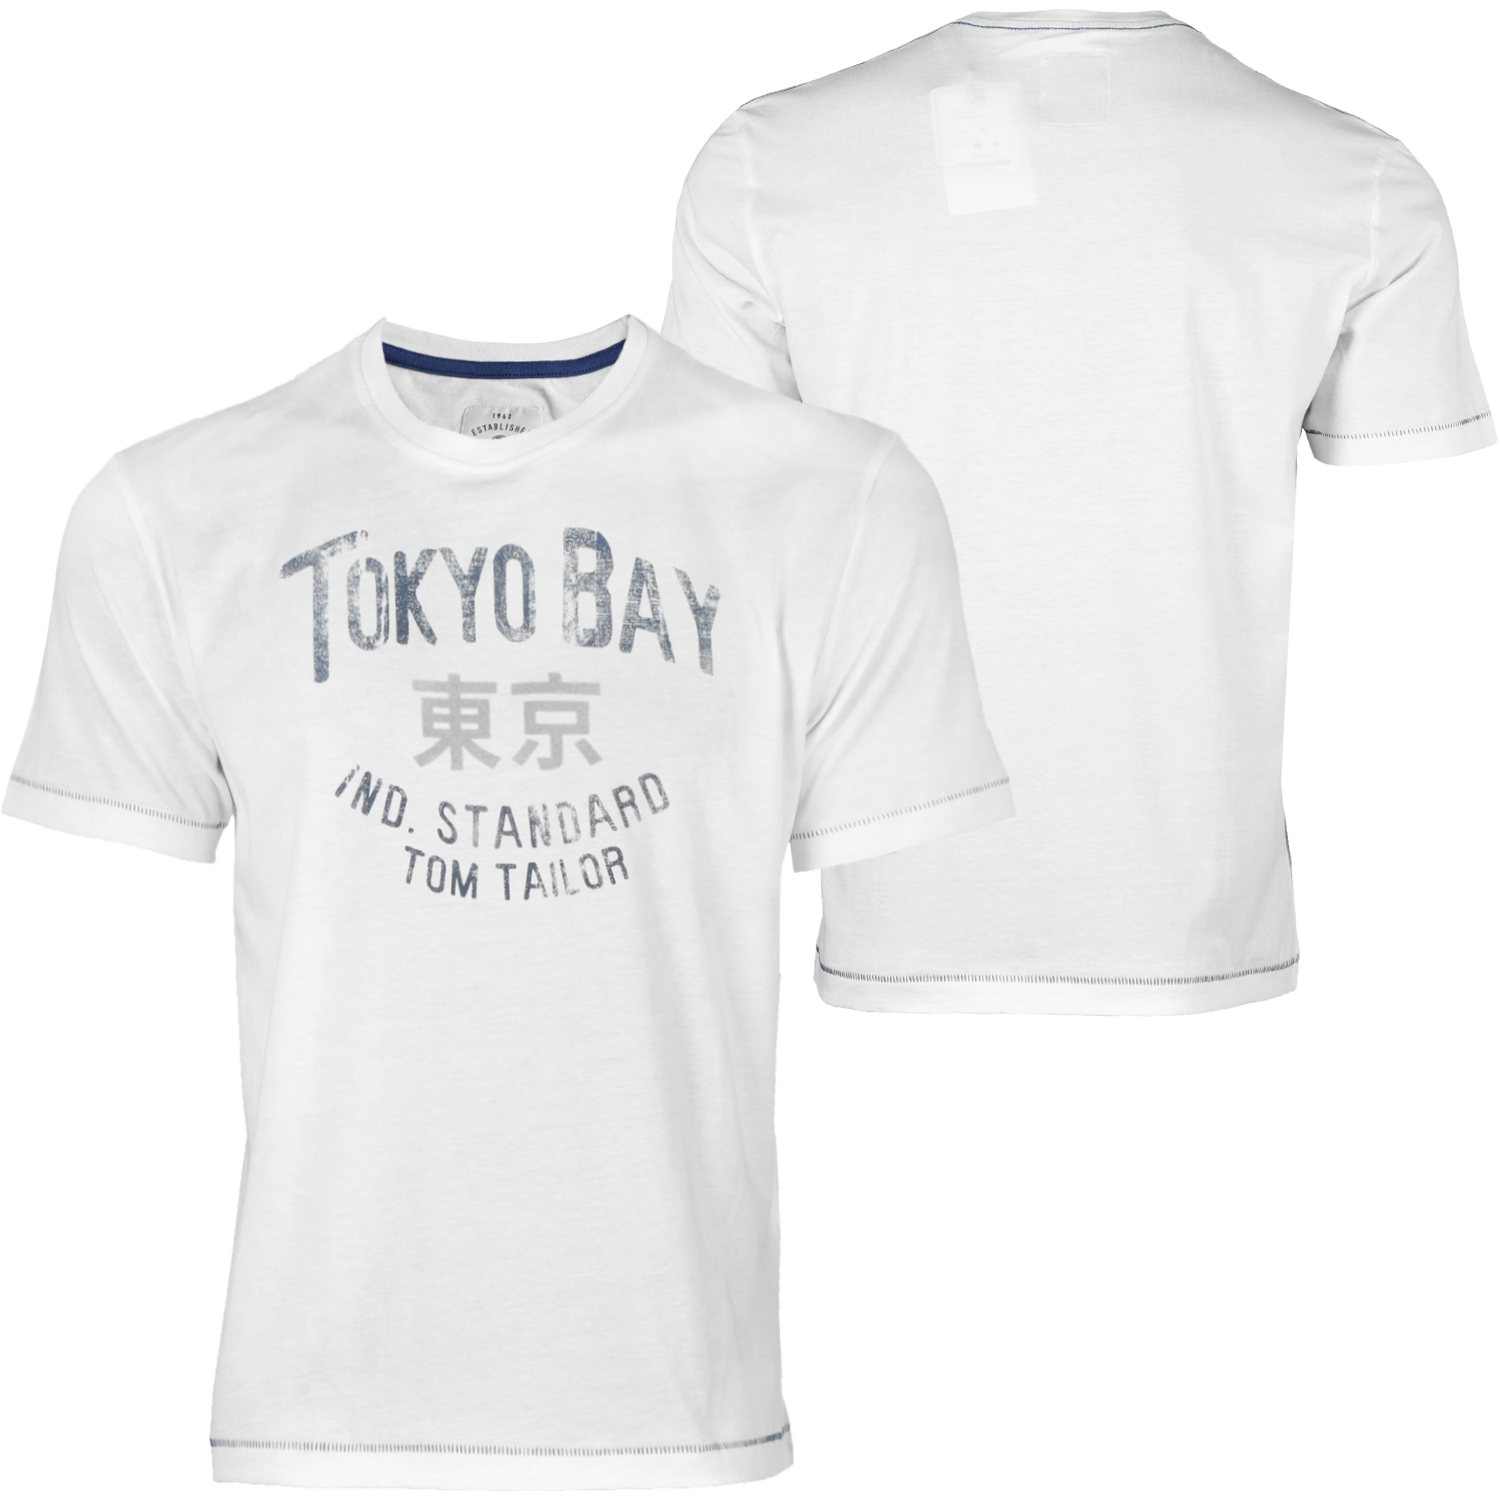 Foto Tom Tailor Tokyo Bay T-shirt Blanco foto 141653